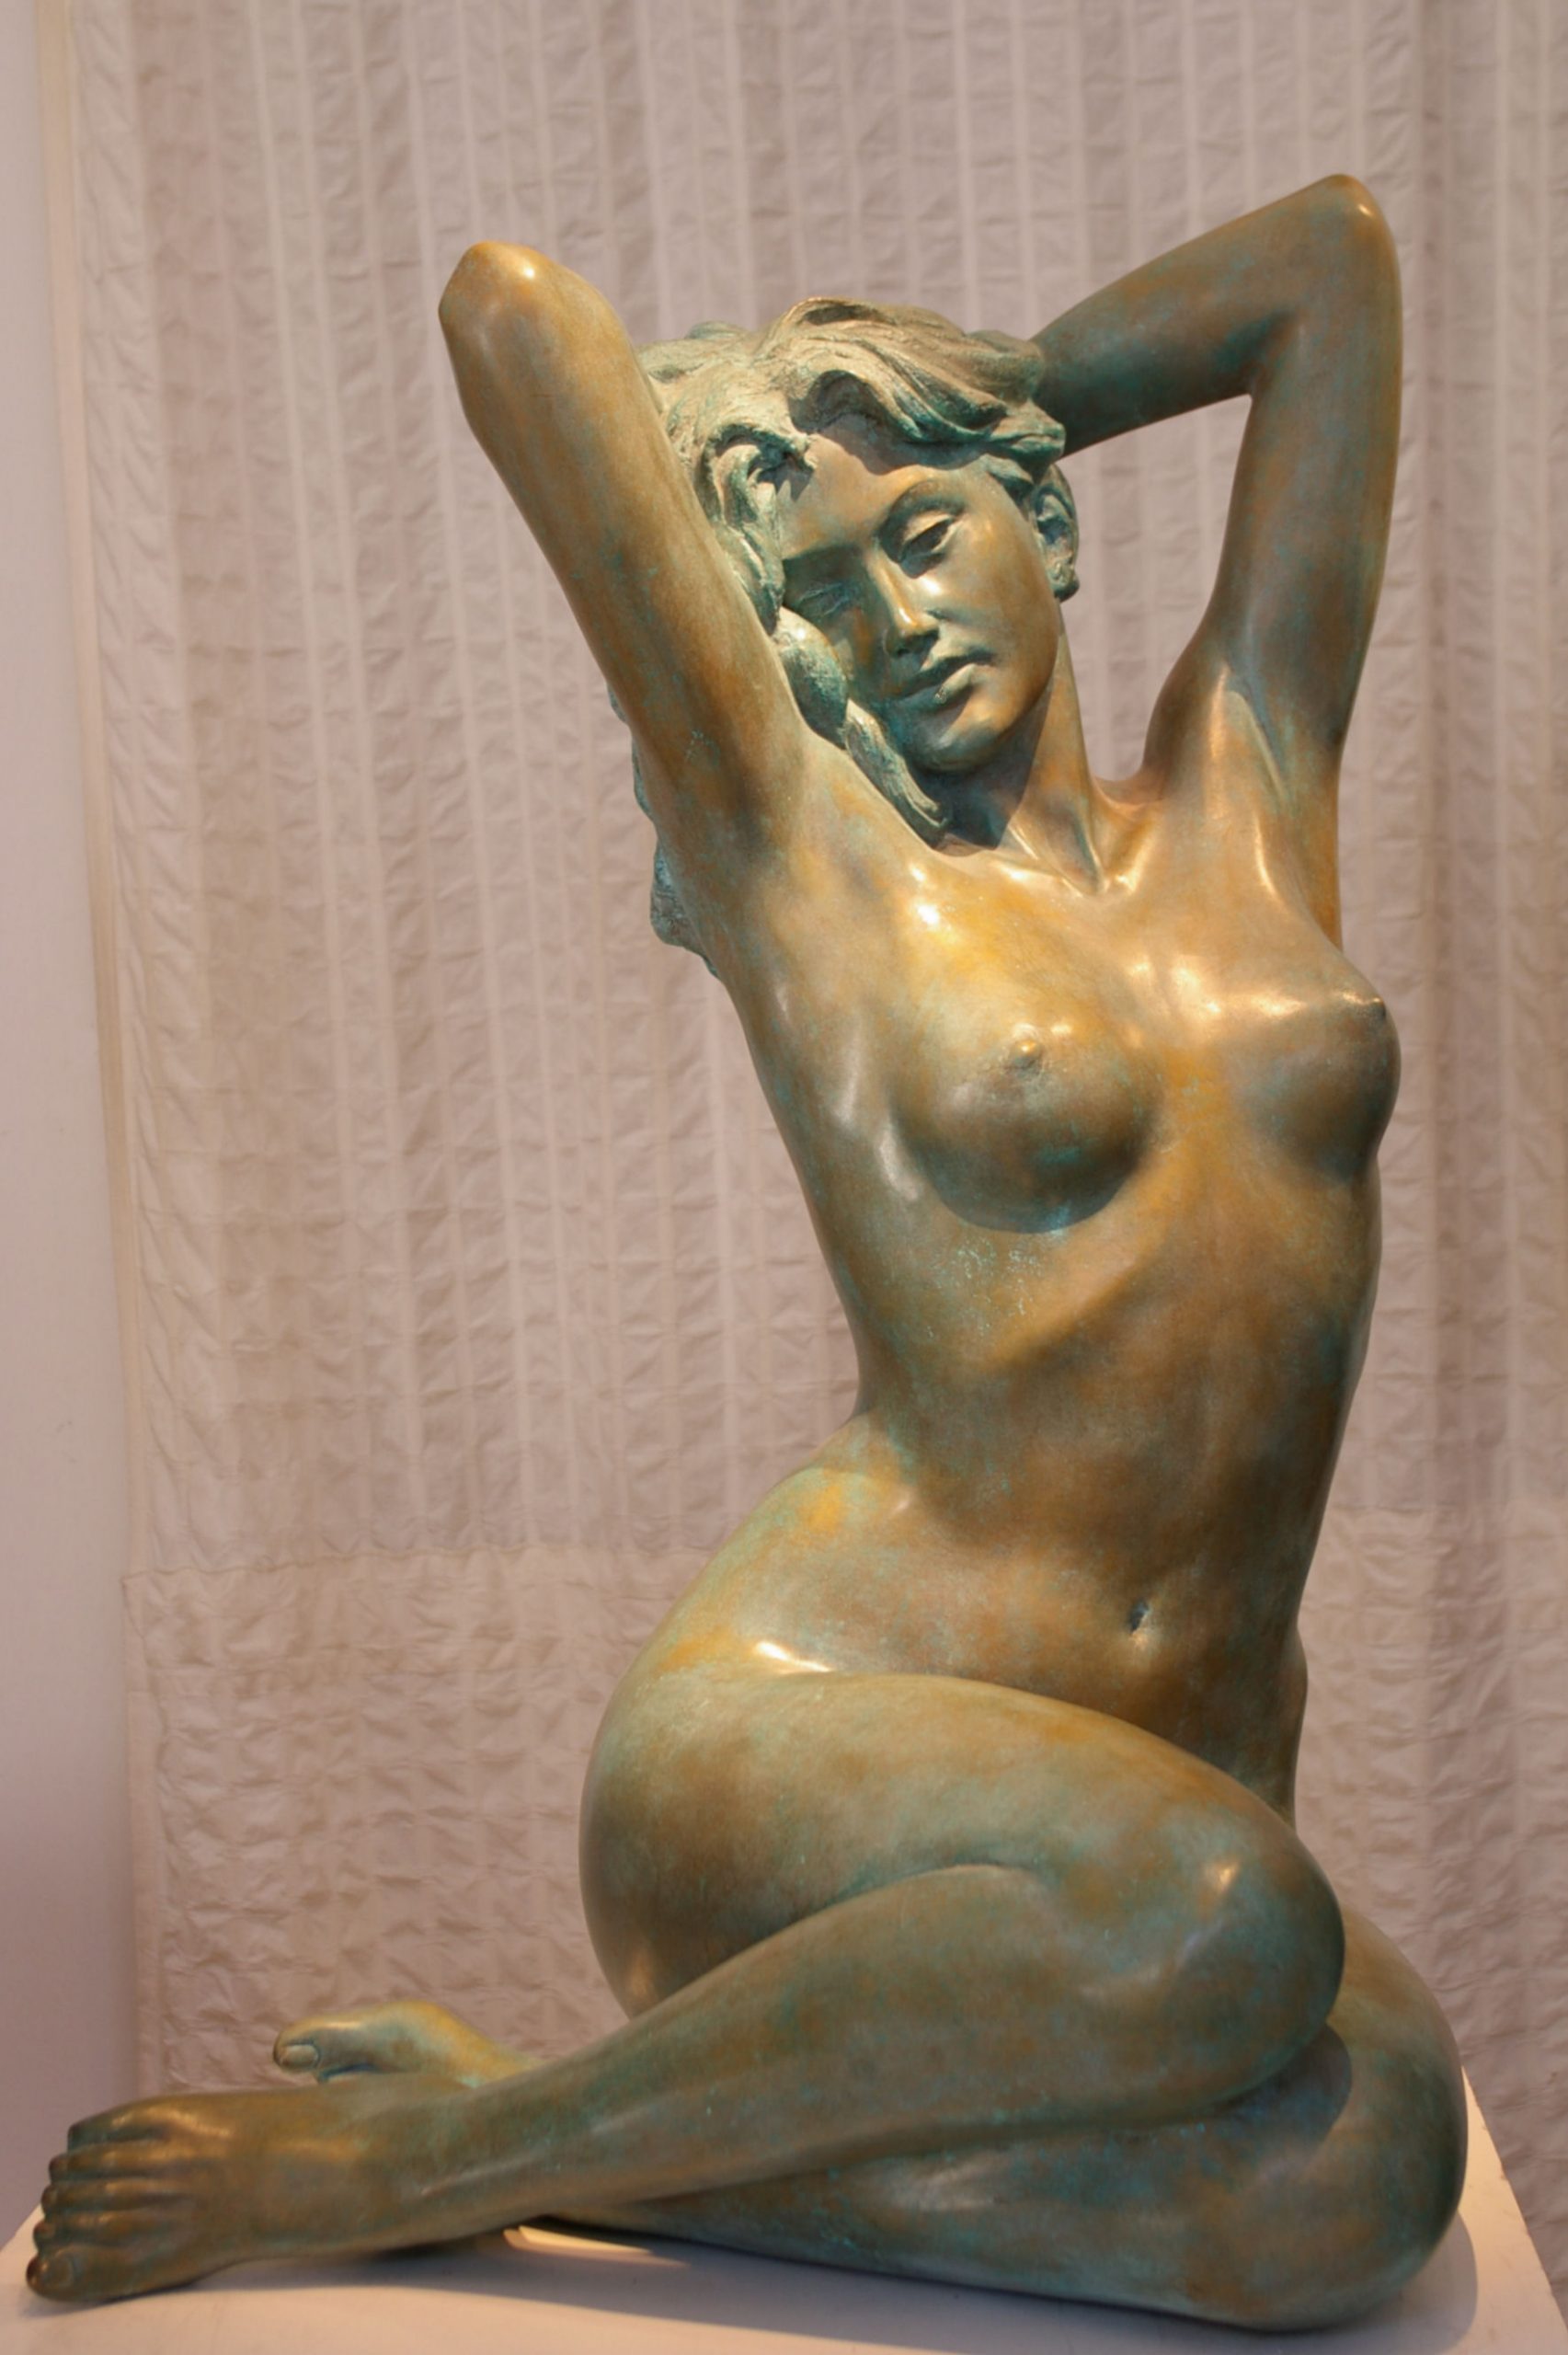 Bronze-statues-of-women-sculptures-artistic-female-nudes-code-21-Mirjam-cm85x54x51-year-1984-89